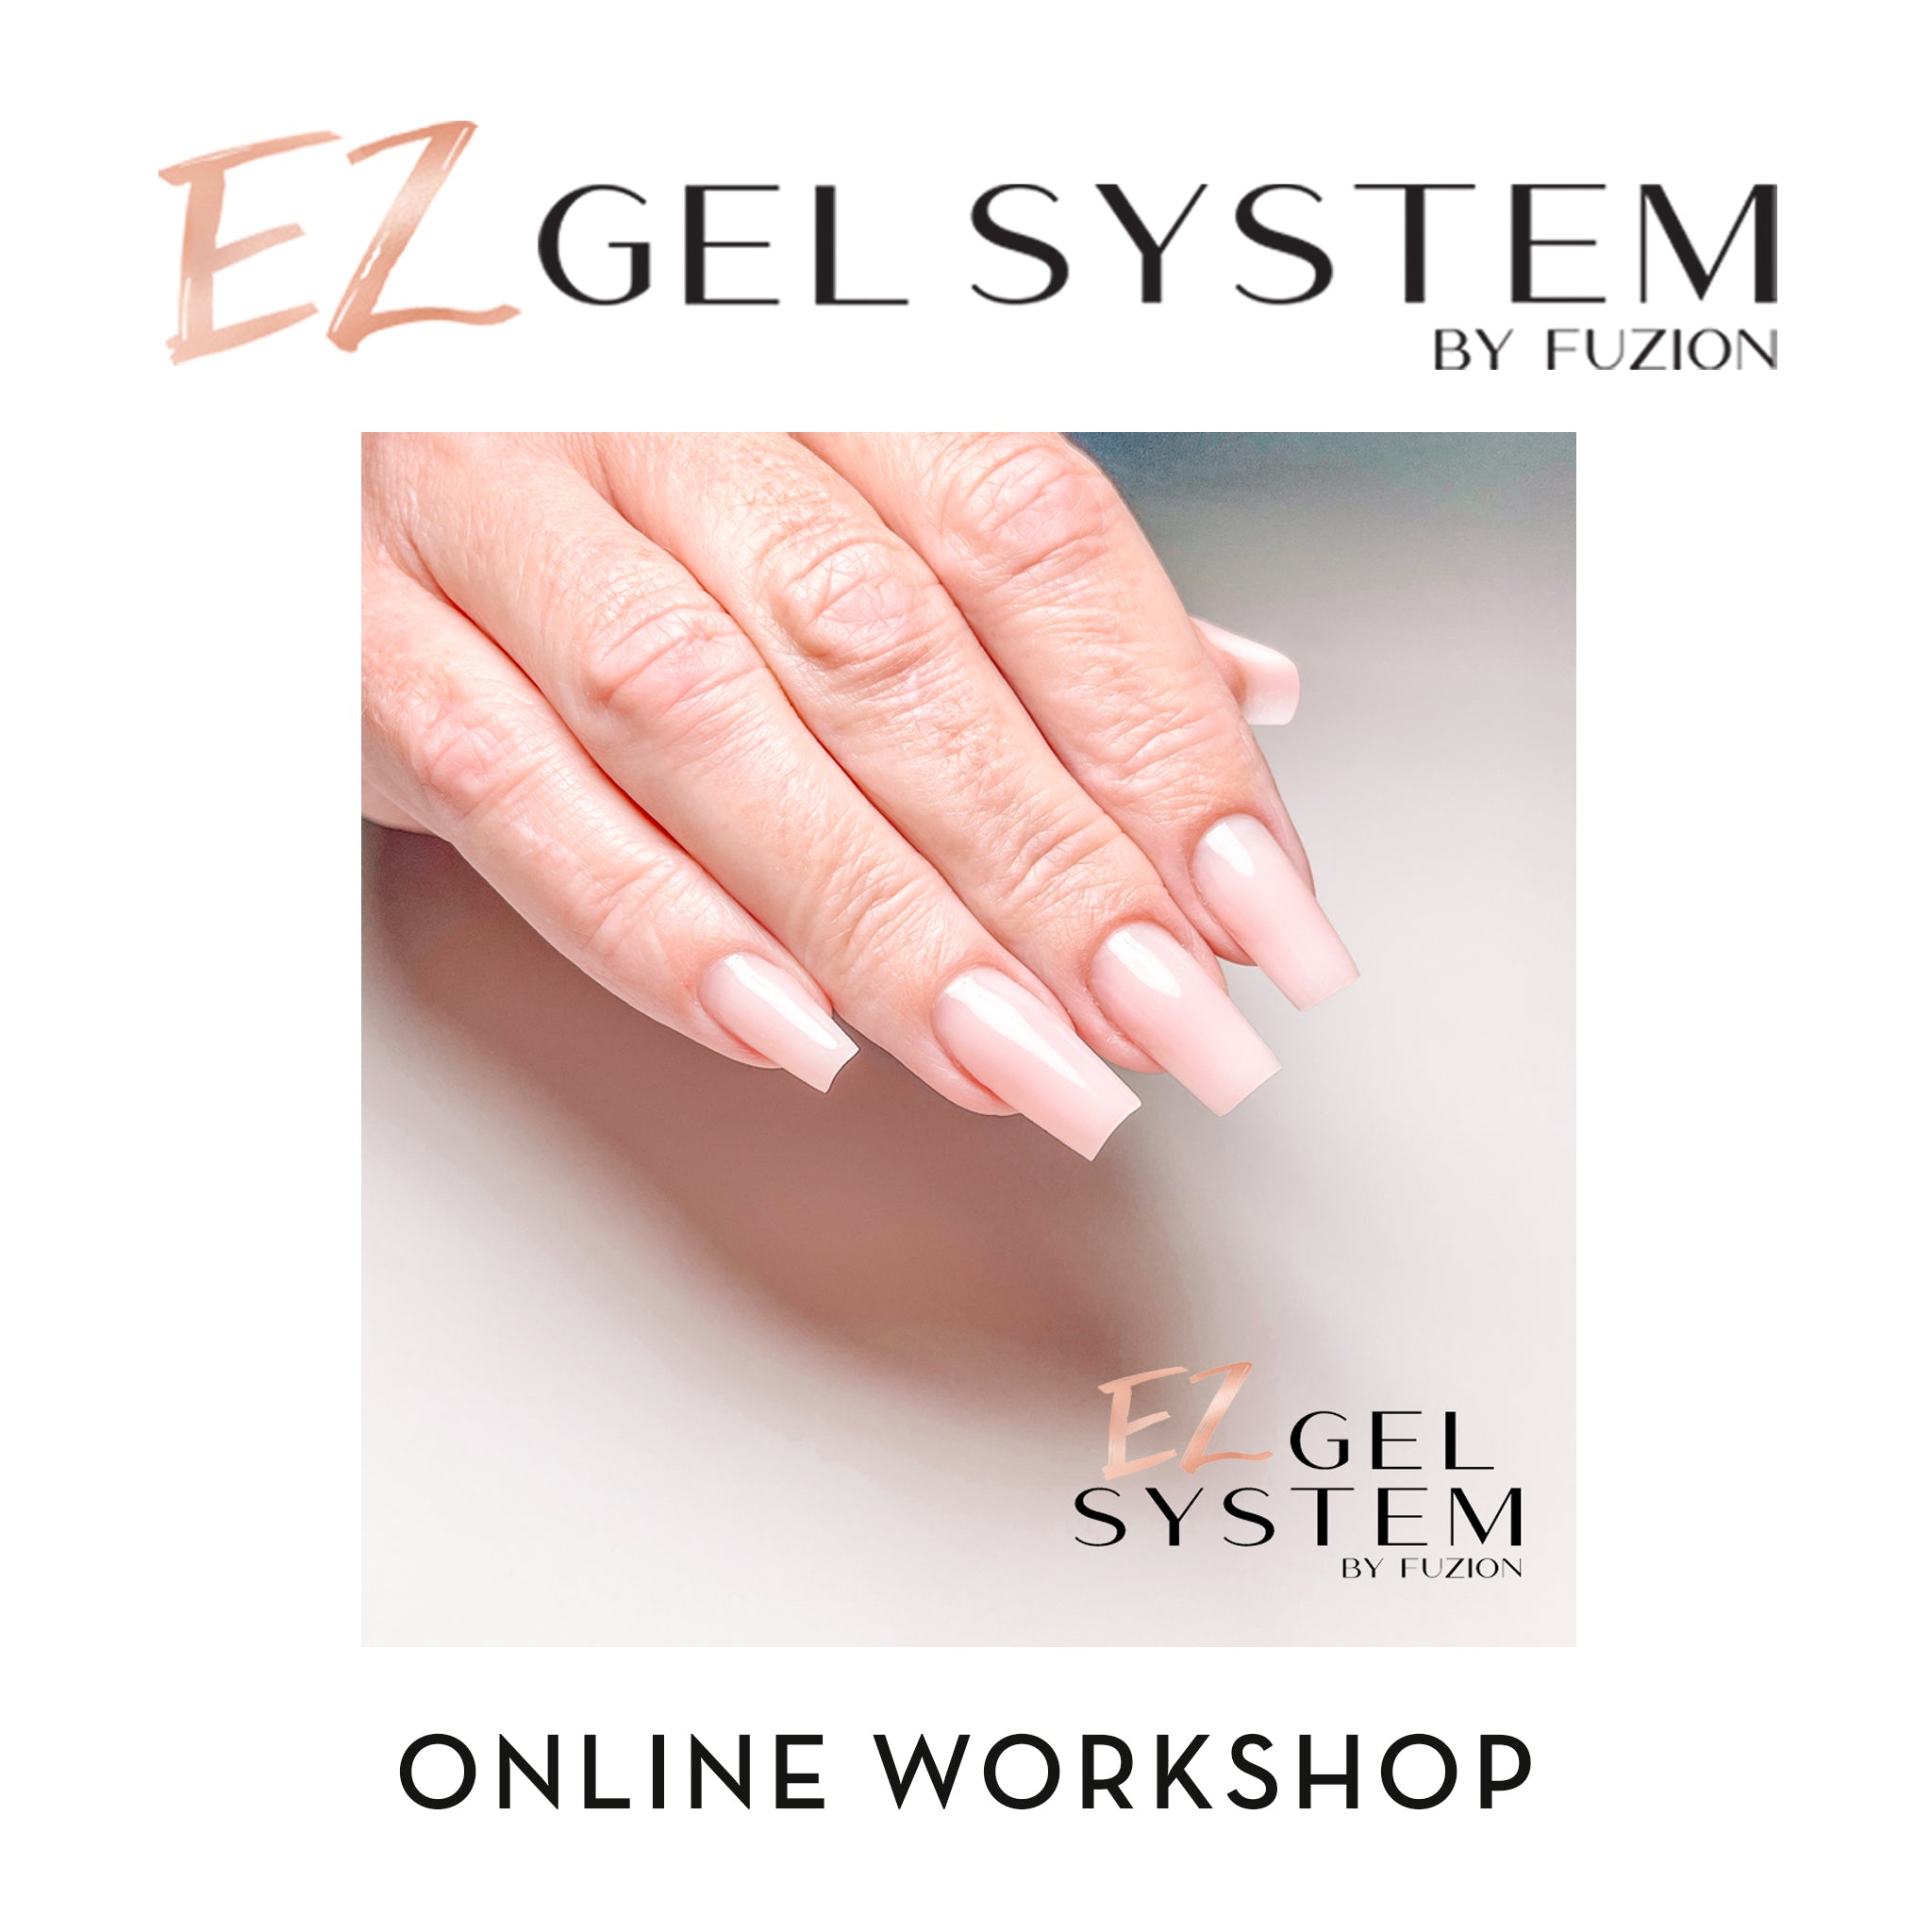 Learn Fuzion's New EZ Gel System! - Online Workshop